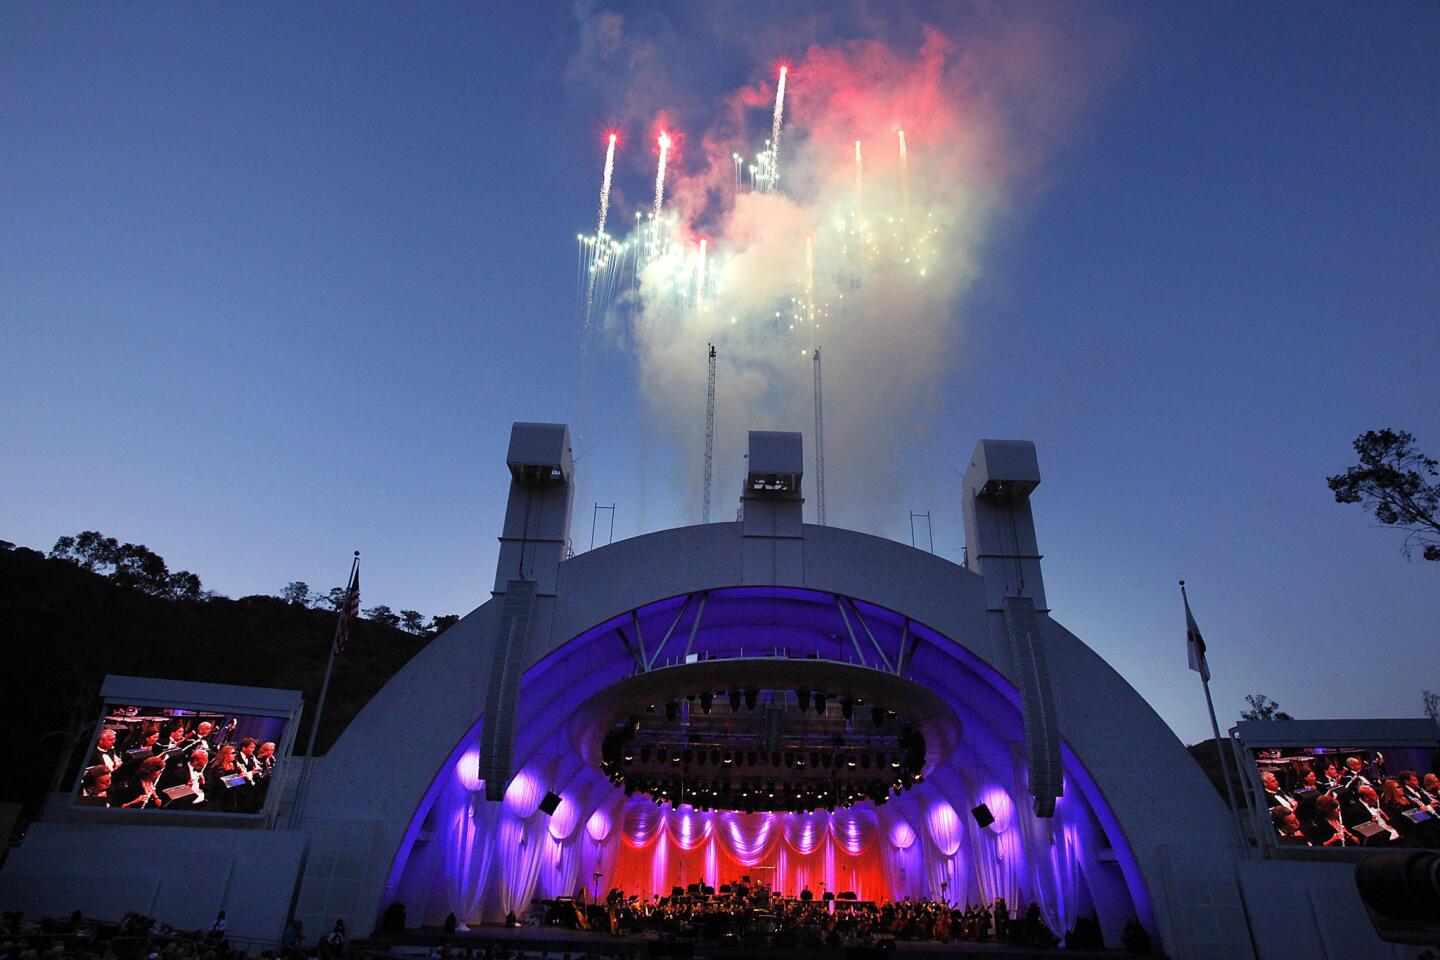 Hollywood Bowl Hall of Fame concert